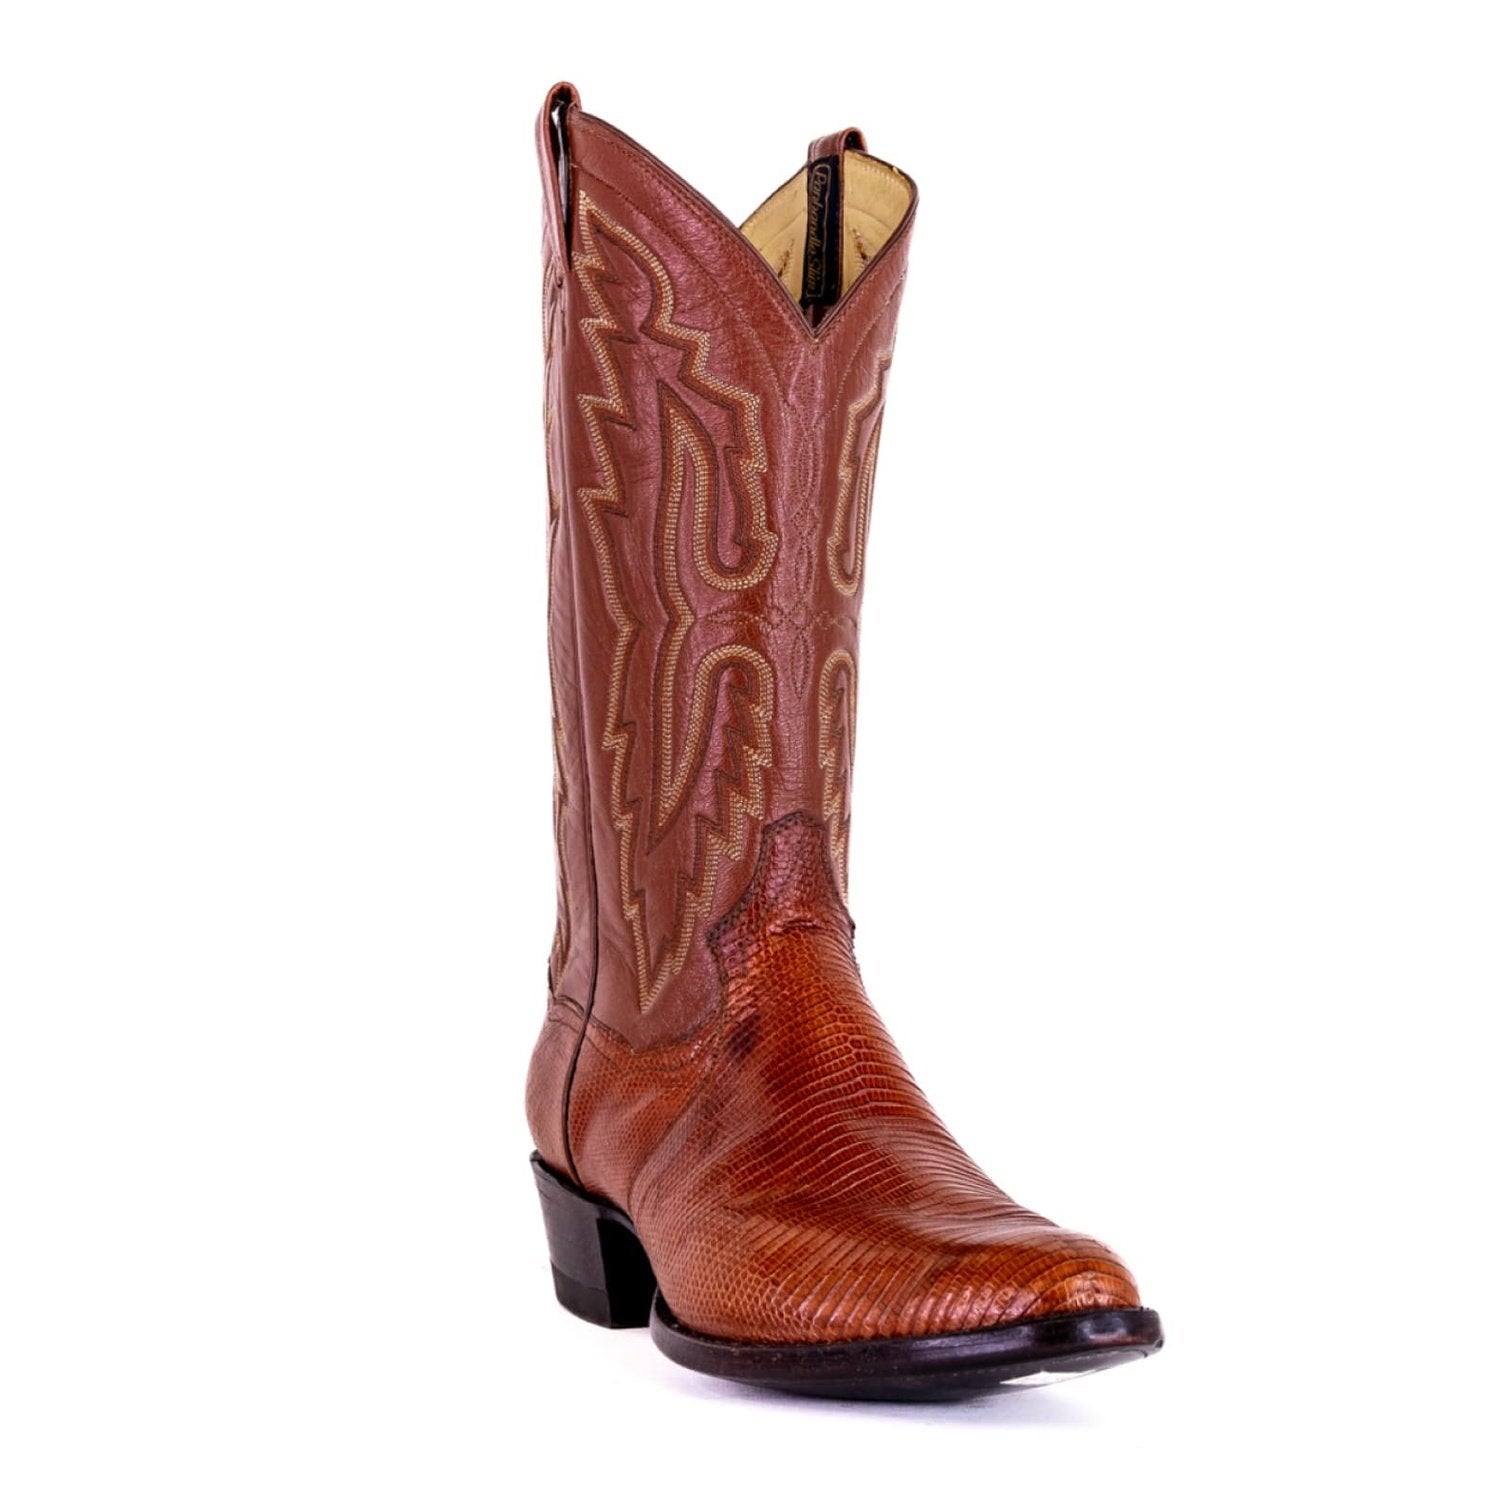 Panhandle Slim Men's Cowboy Boots 14" Exotic Lizard Cowboy Heel R Toe 6-LIZARD 45735